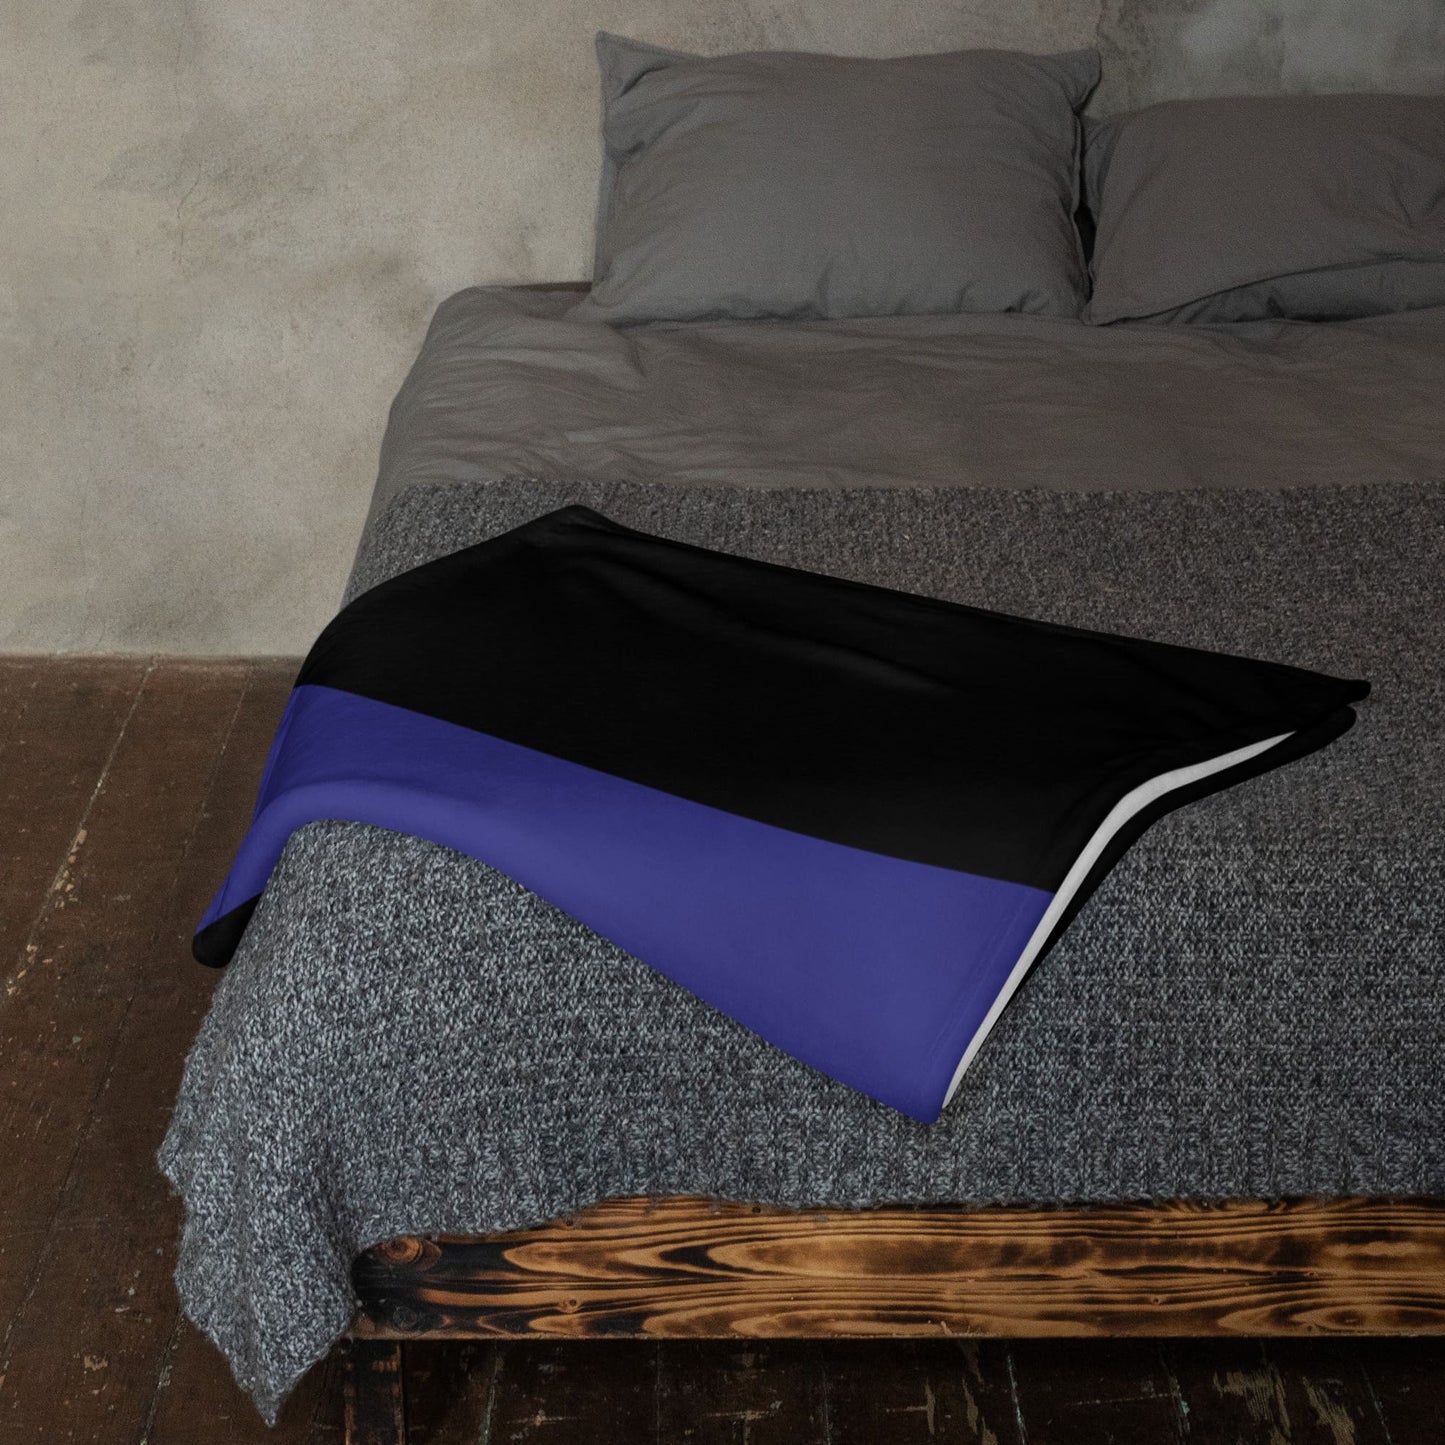 leather pride blanket on bed